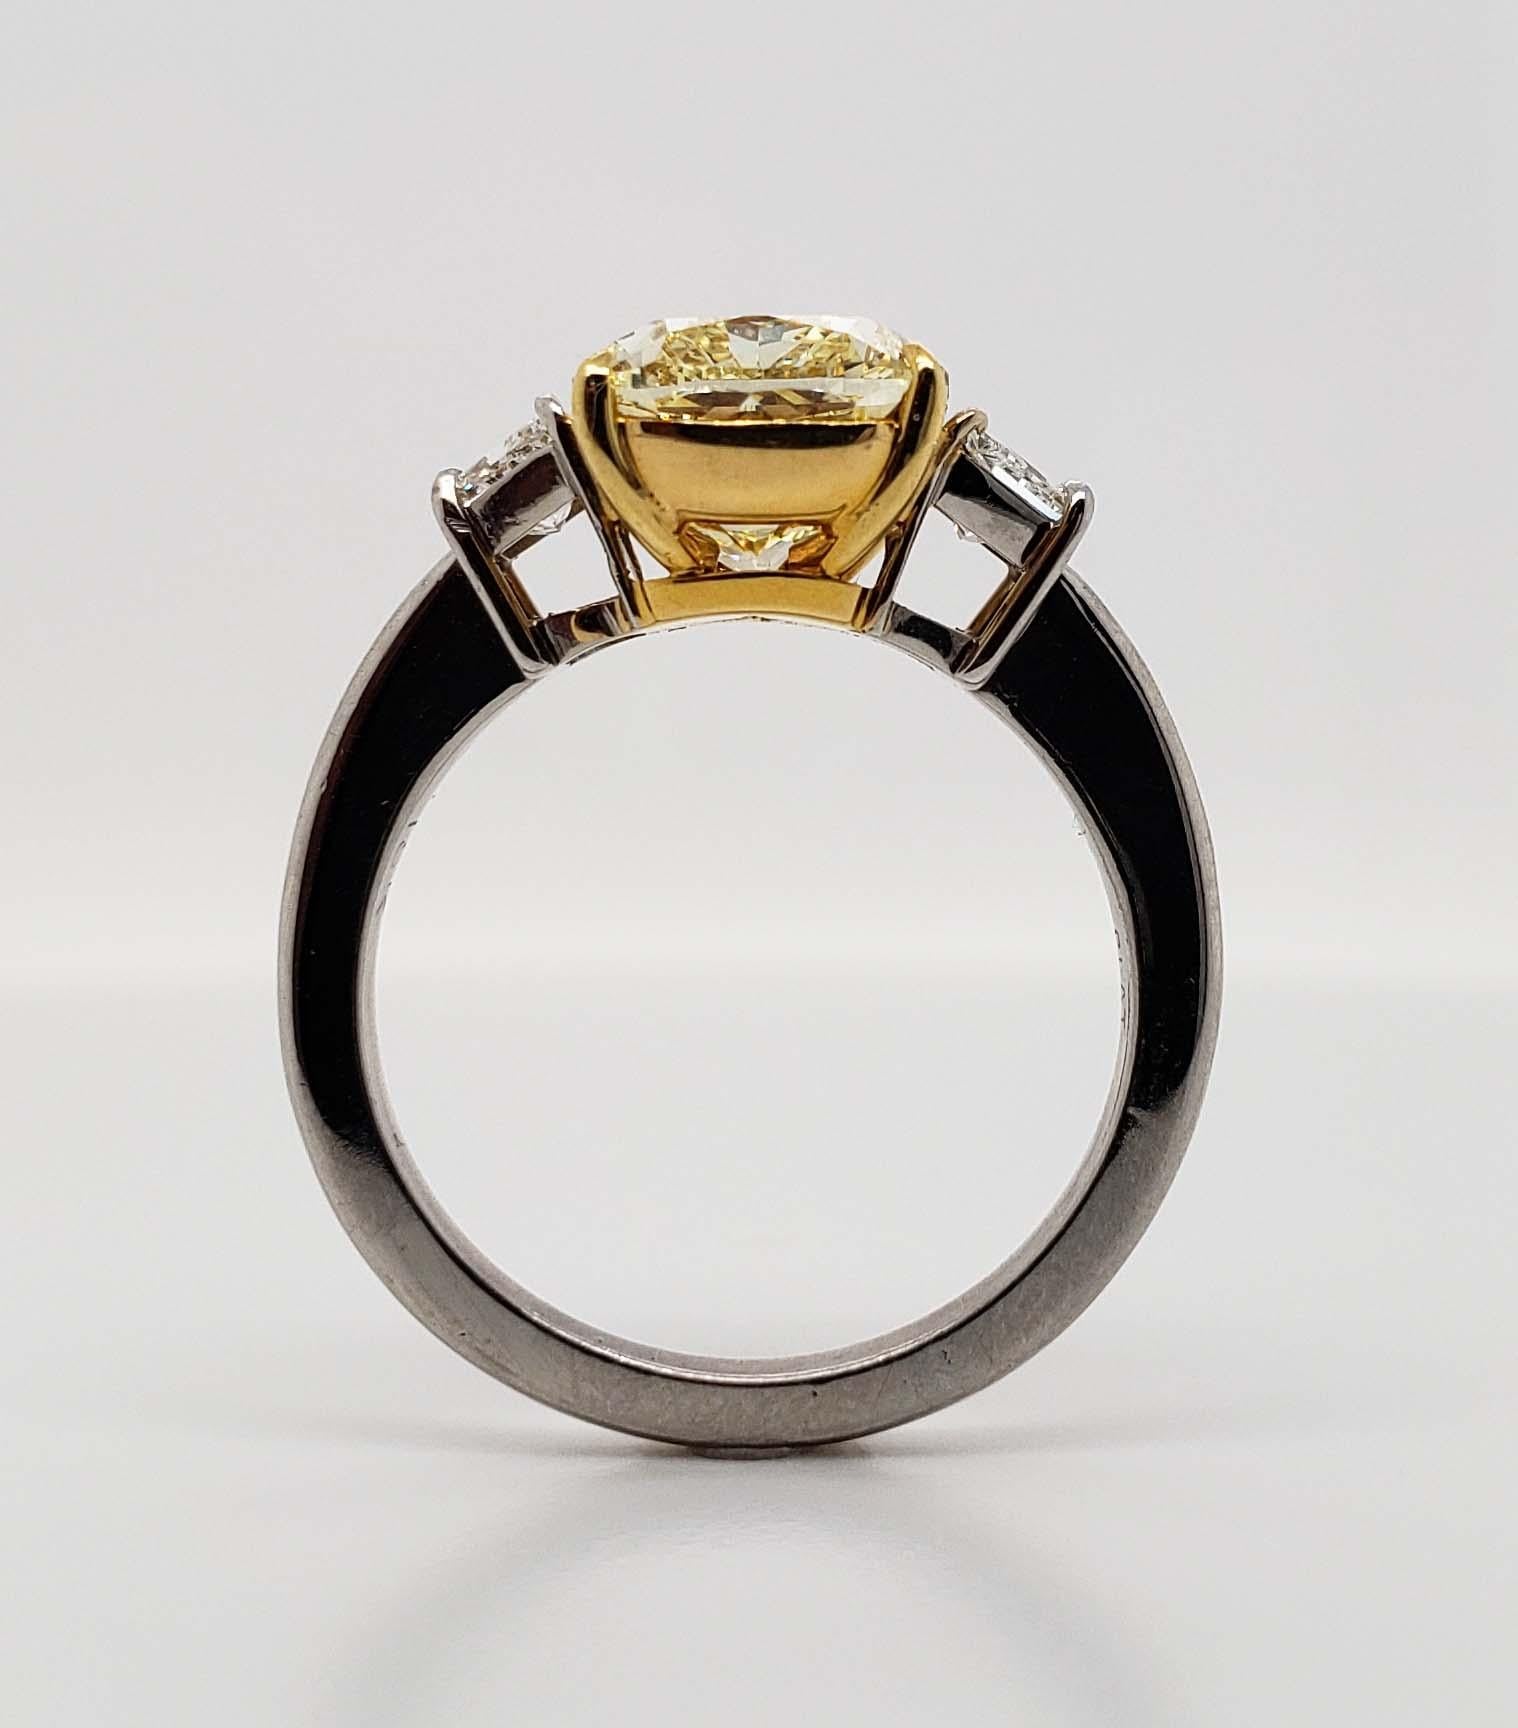 Contemporary Scarselli 3.80 carat Fancy Intense Yellow Cushion Cut Diamond Engagement Ring 